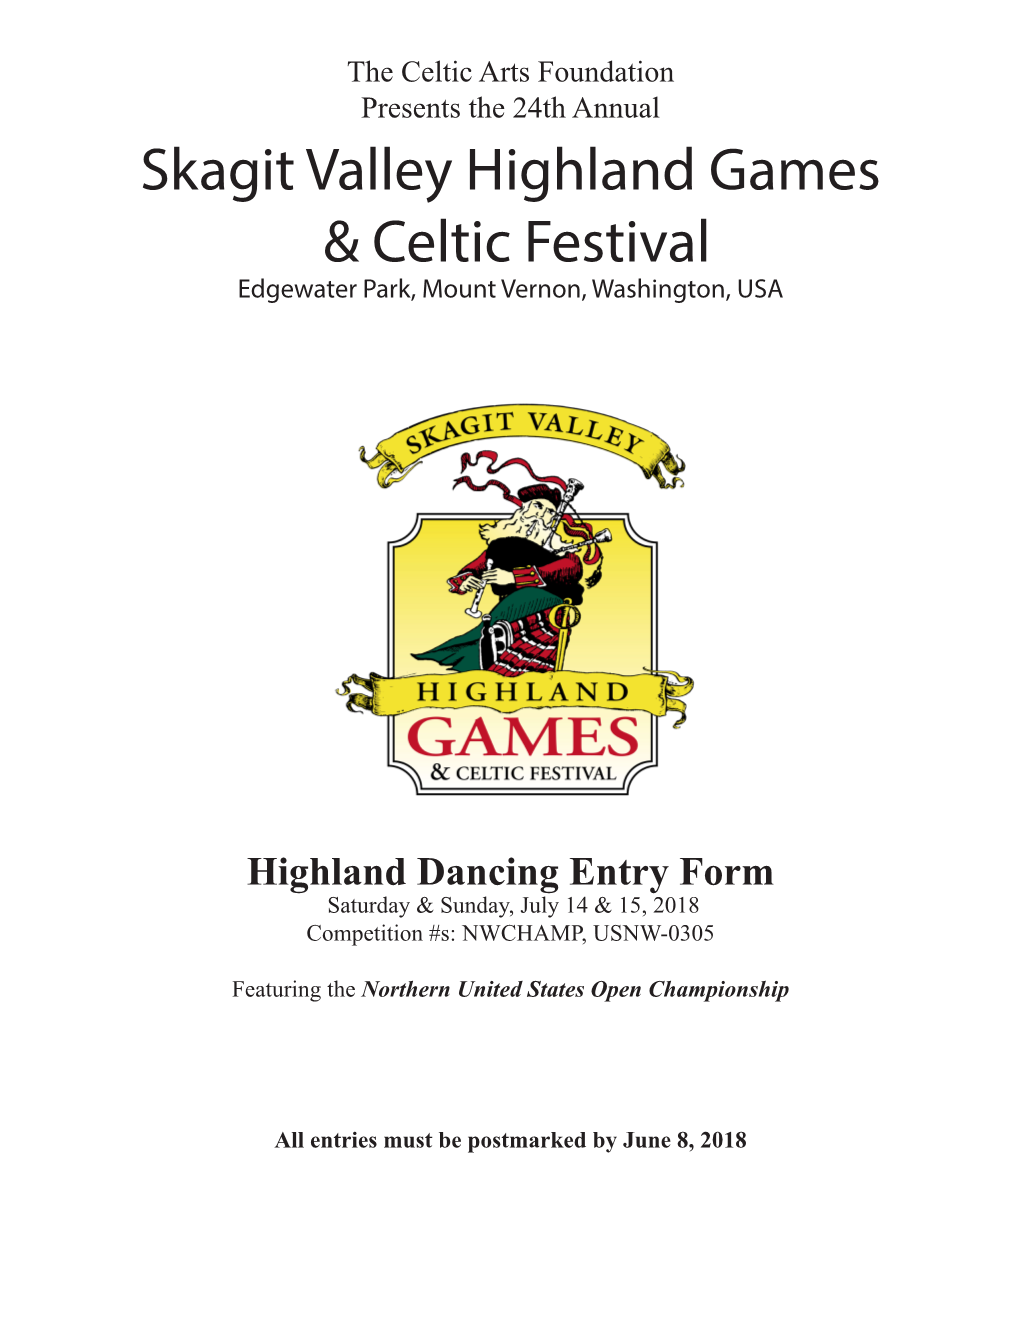 Skagit Valley Highland Games & Celtic Festival